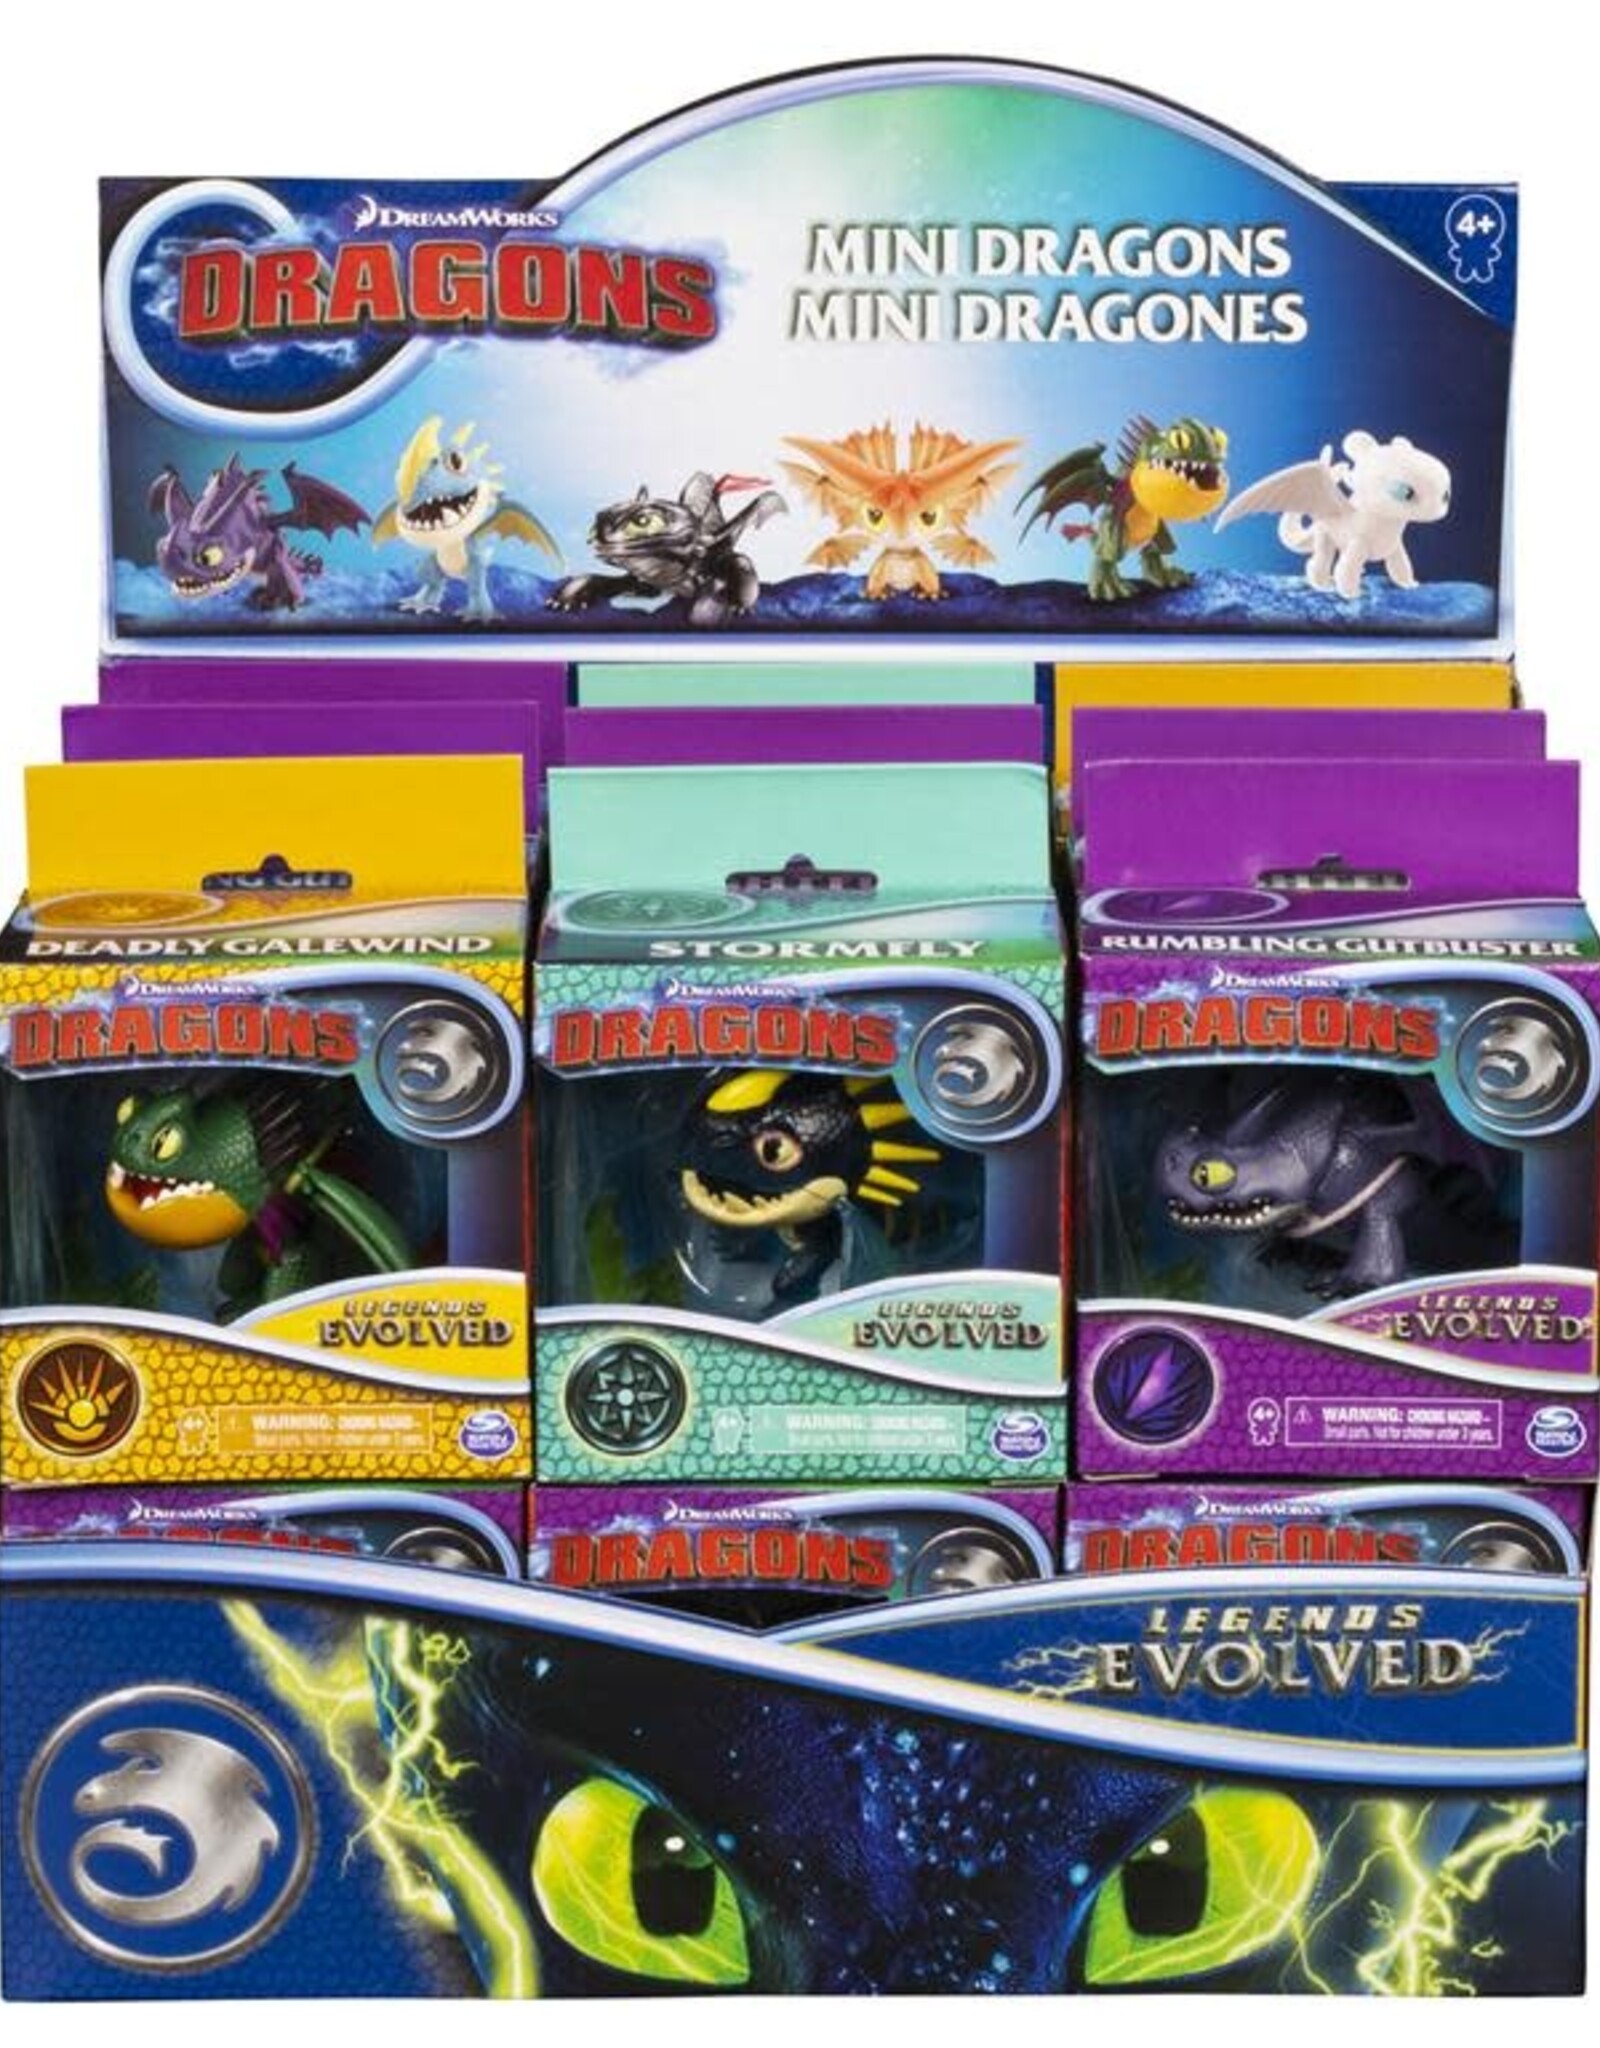 Gund/Spinmaster DreamWorks Dragons, Collectible Mini Dragon Figure